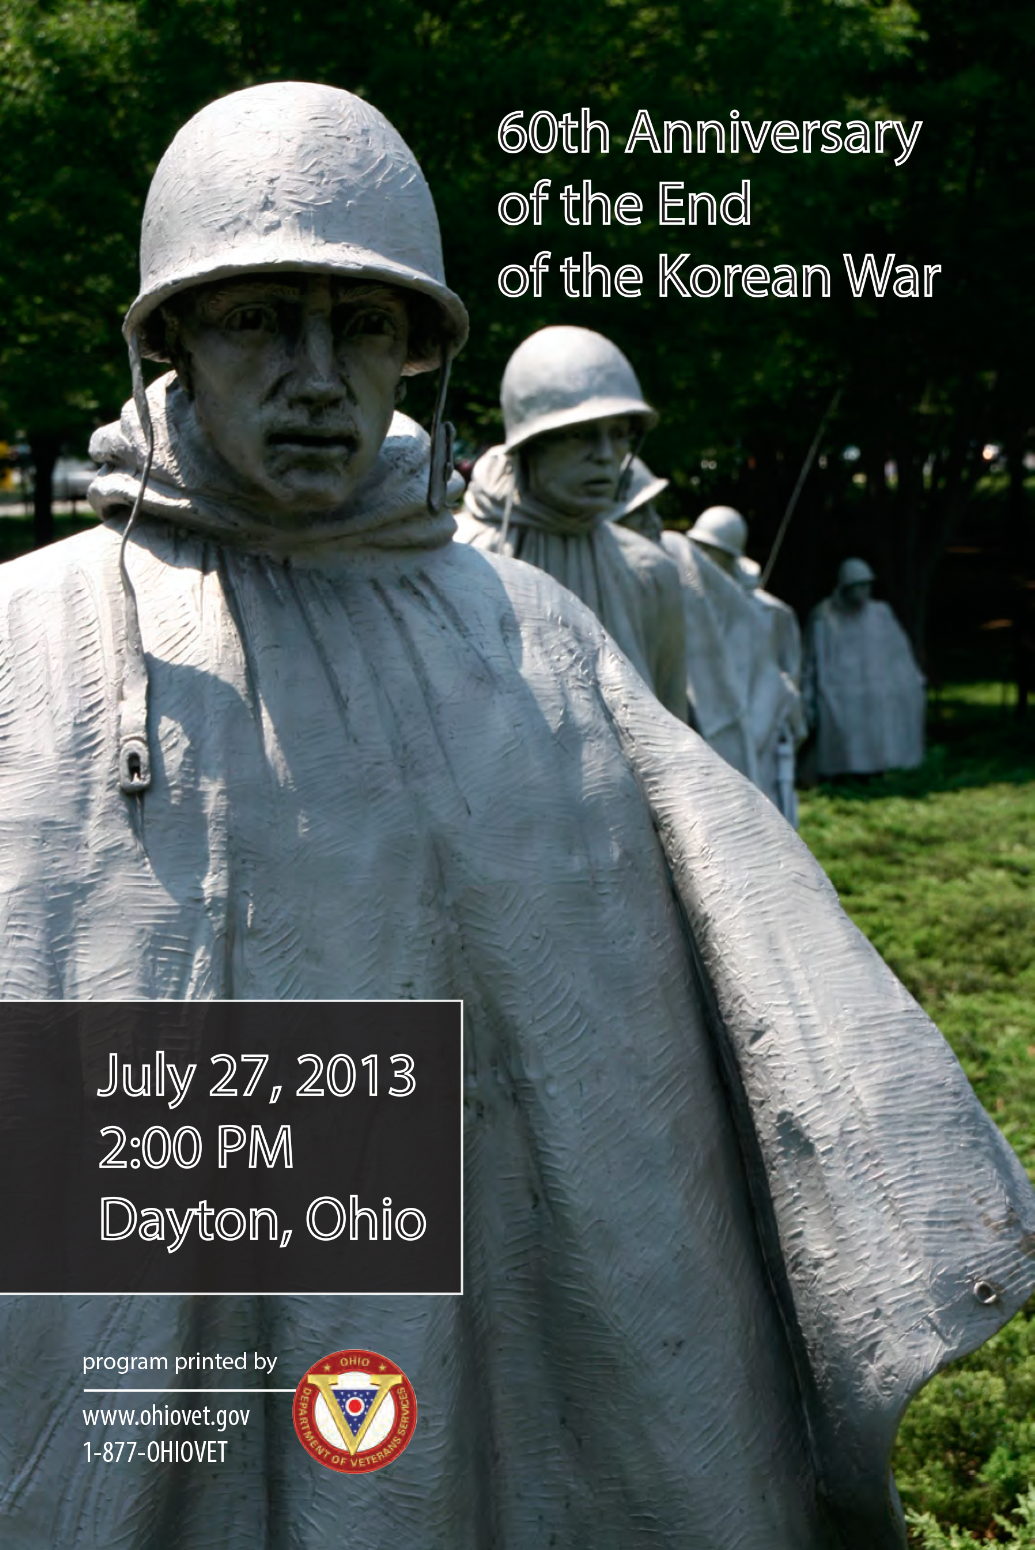 Korean War event program cover